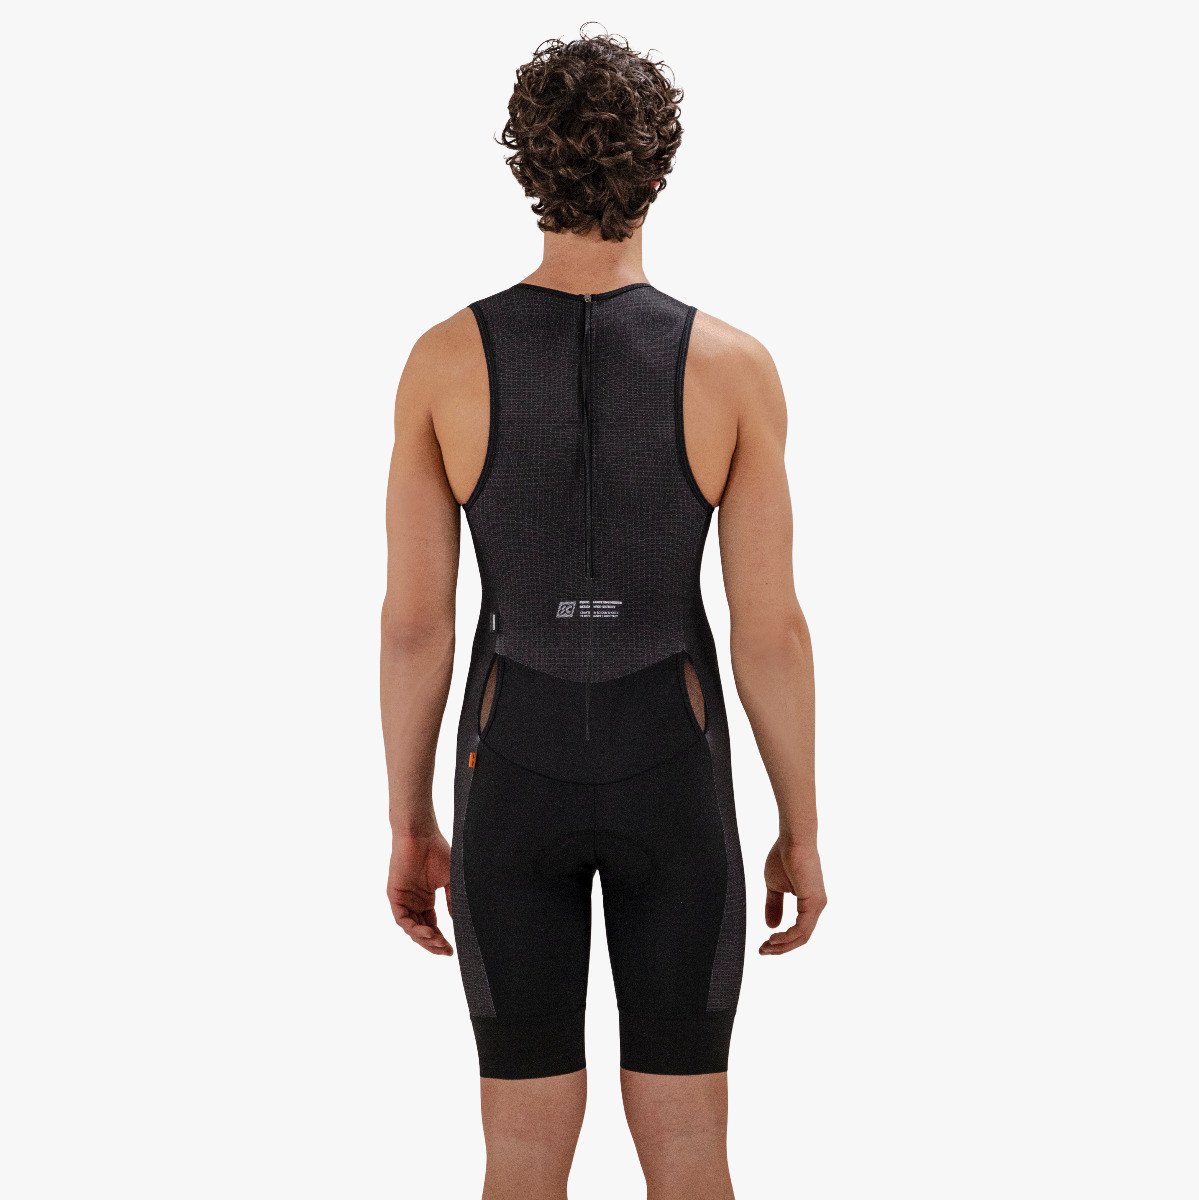 x over sleeveless triathlon suit body black ts11910